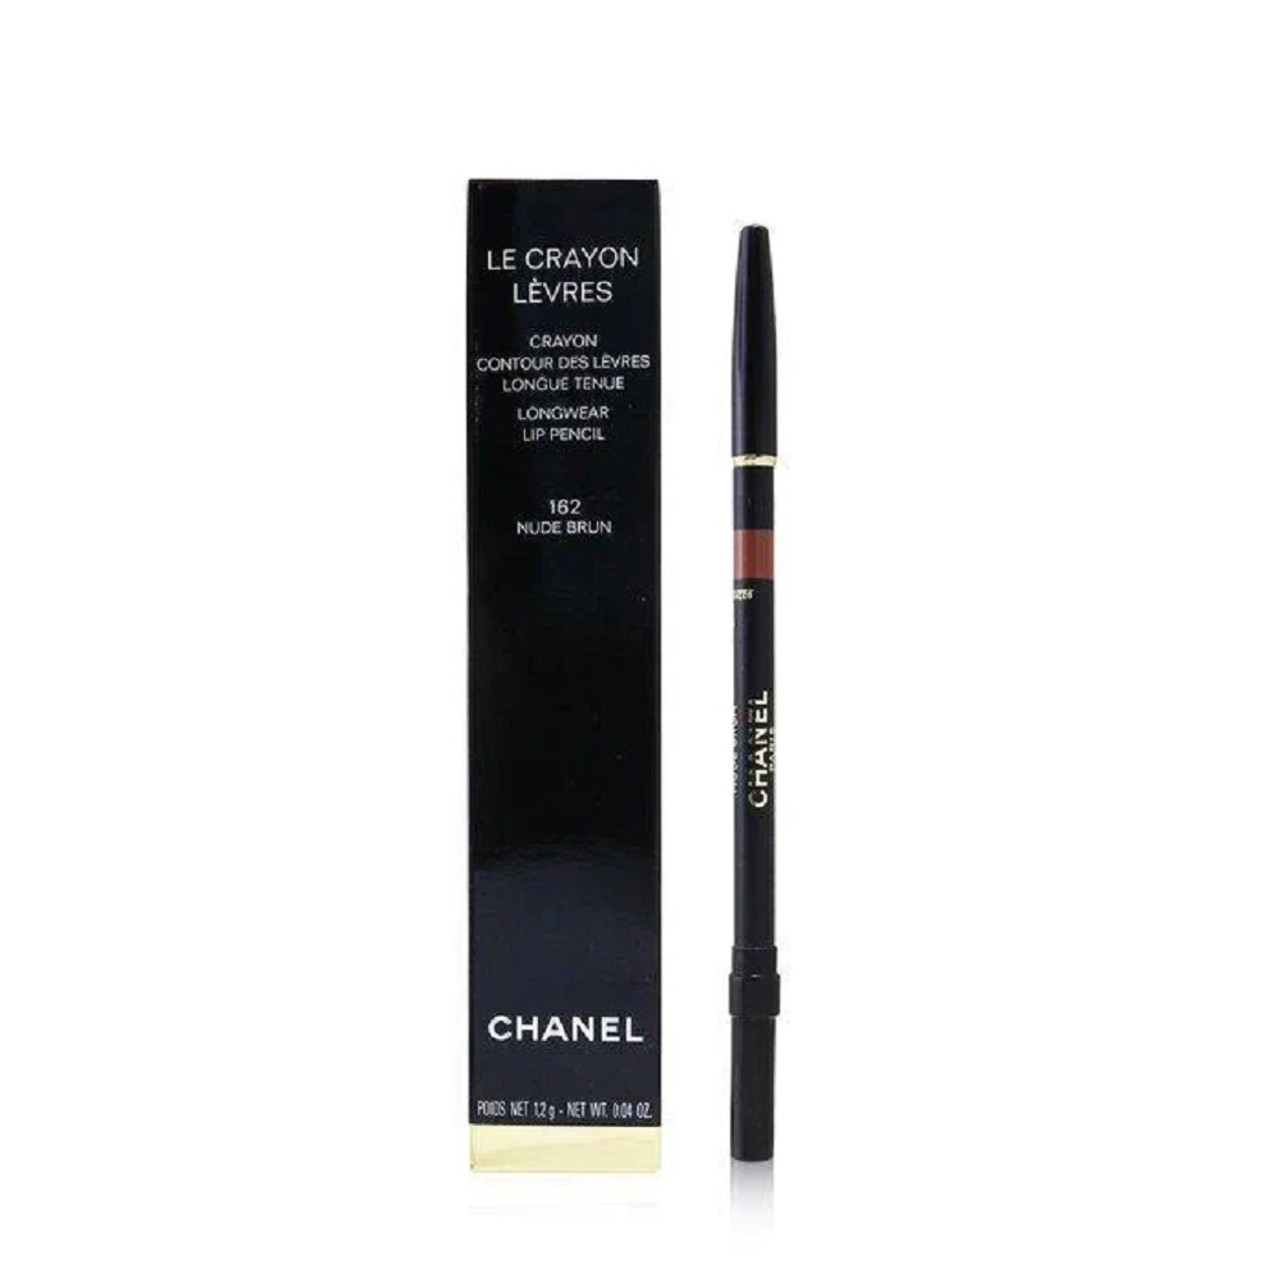 Chanel (Cosmetics) 1943 Gardenia Hand Soap, Lipstick, N°5